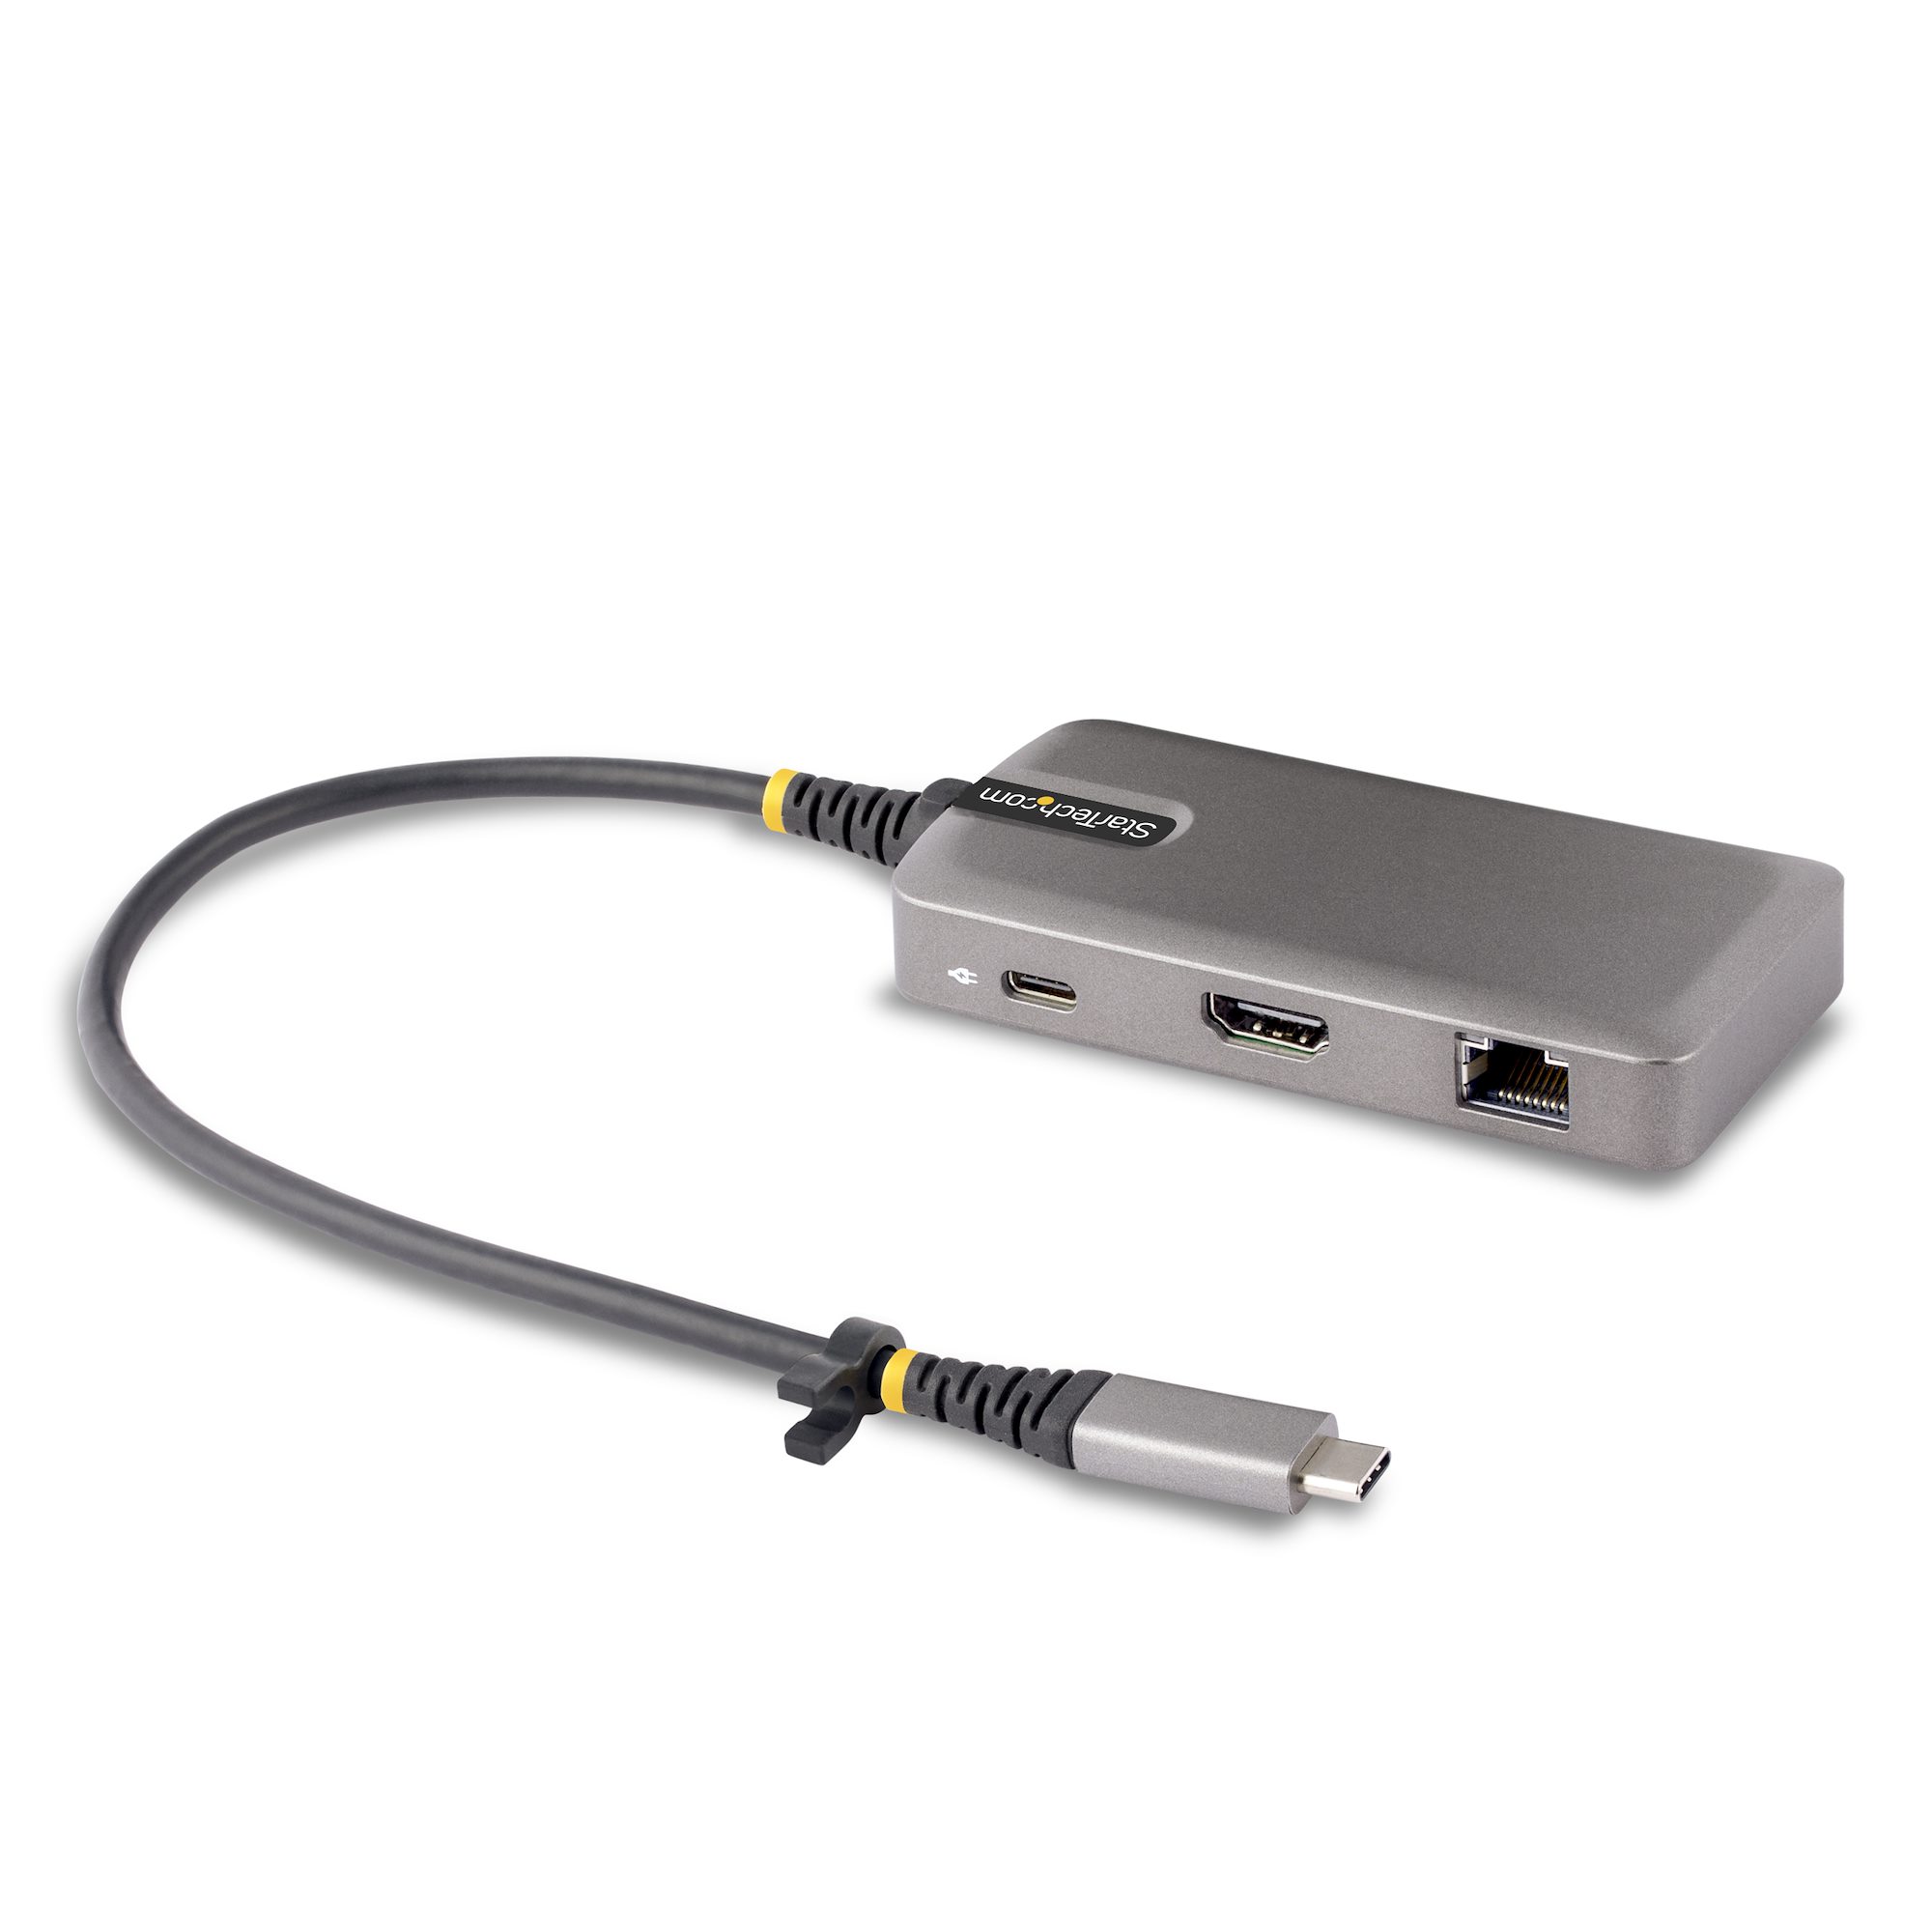 USB-C Multiport Adapter, HDMI, USB Hub - USB-Cマルチポートアダプター | StarTech.com 日本